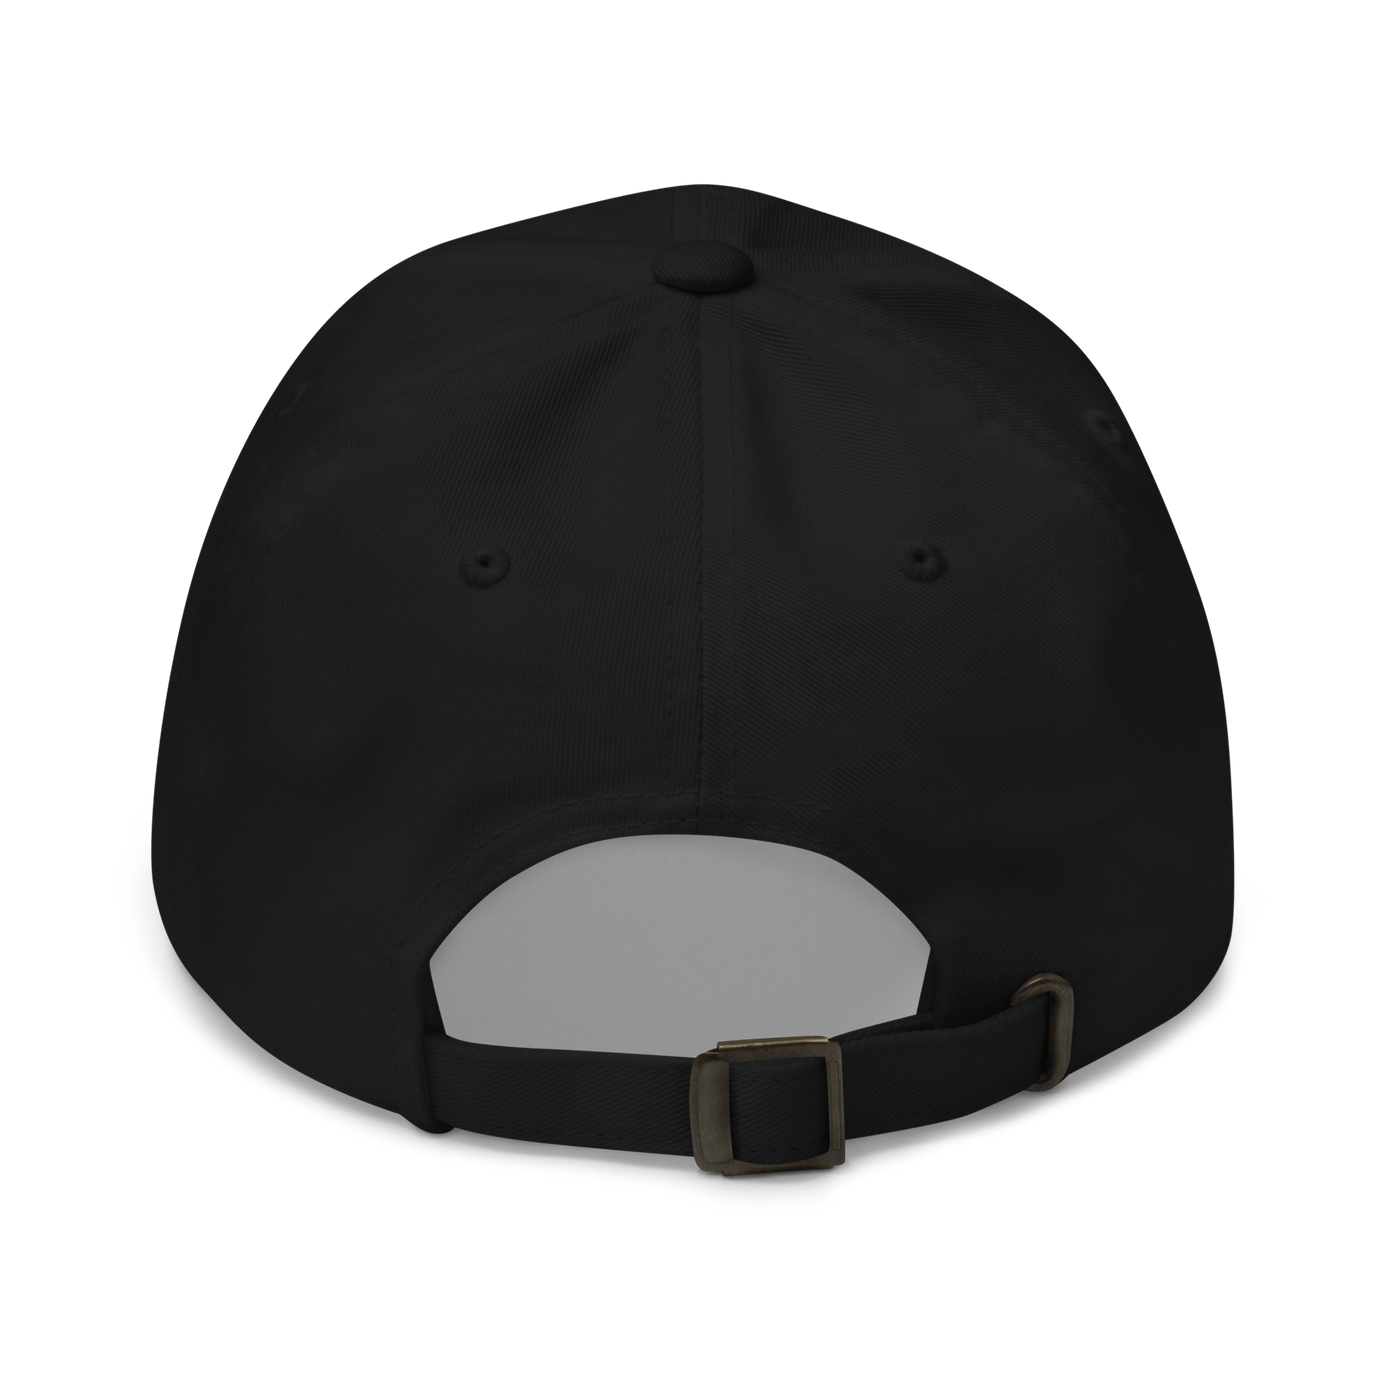 Sauerkraut Dad hat - Black - - Just Another Cap Store